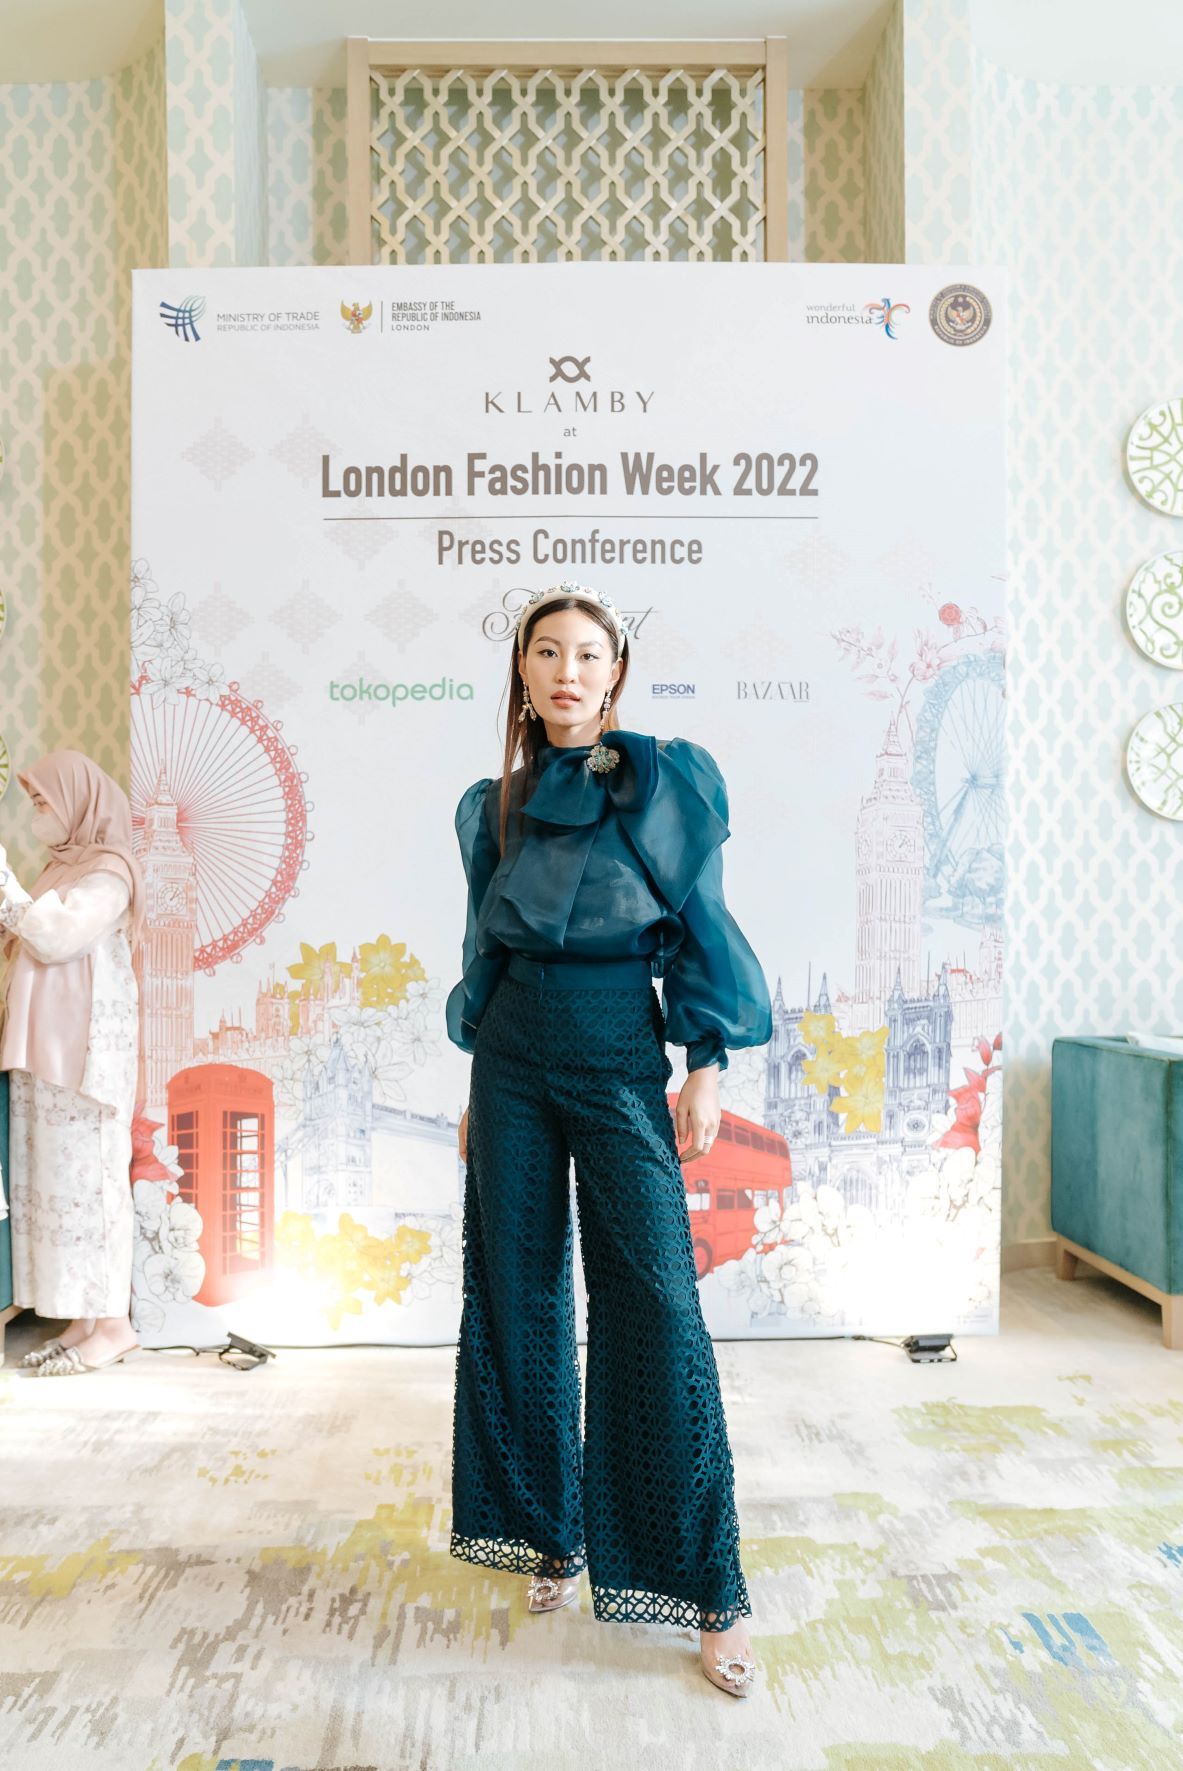 Klamby Prepares to Hold Fashion Show at London Fashion Week 2022